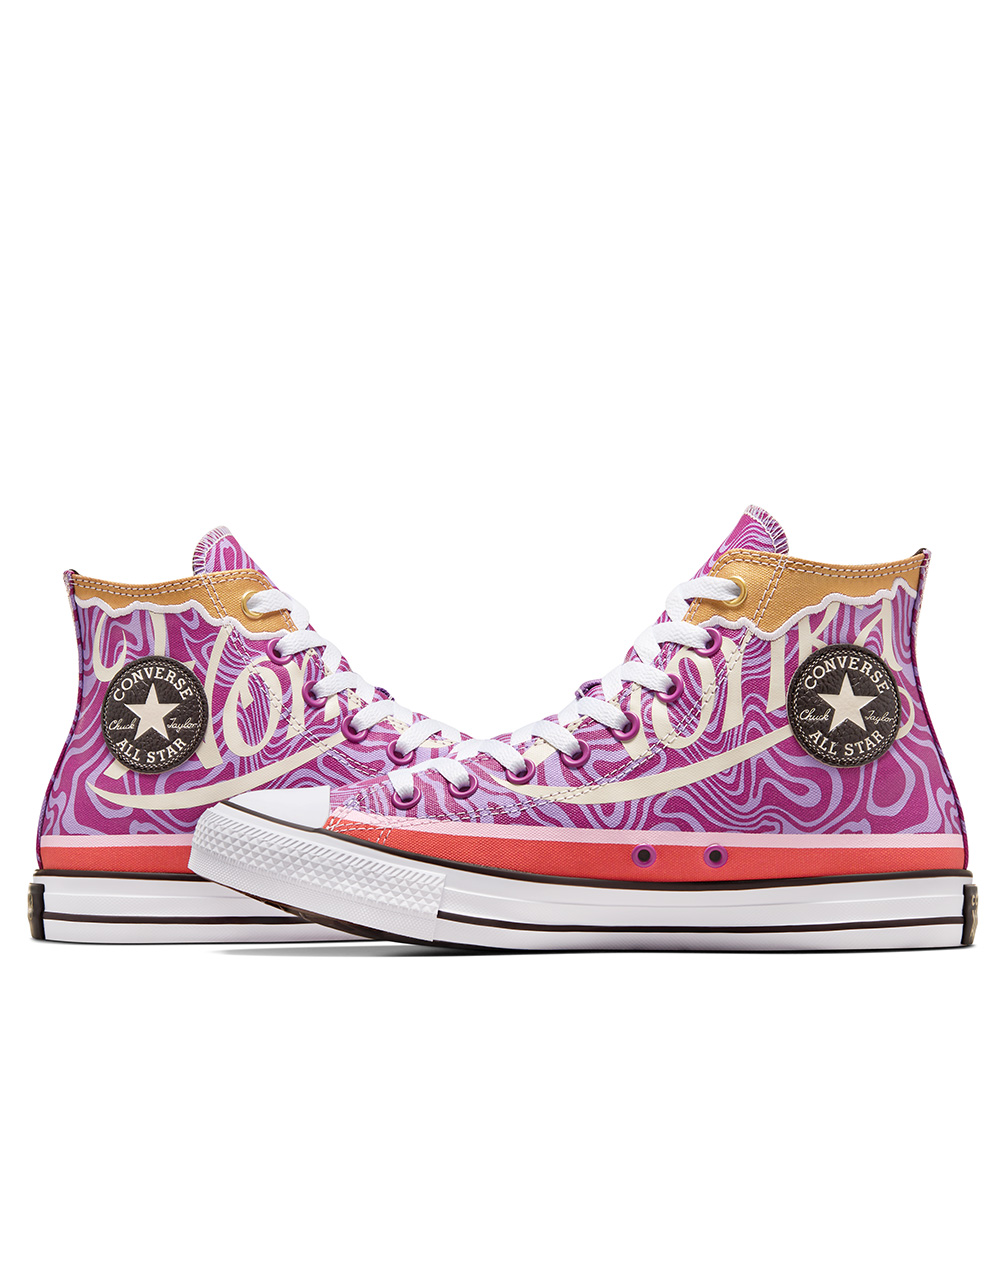 CONVERSE x Wonka Chuck Taylor All Star Swirl High Top Shoes - DARK ...